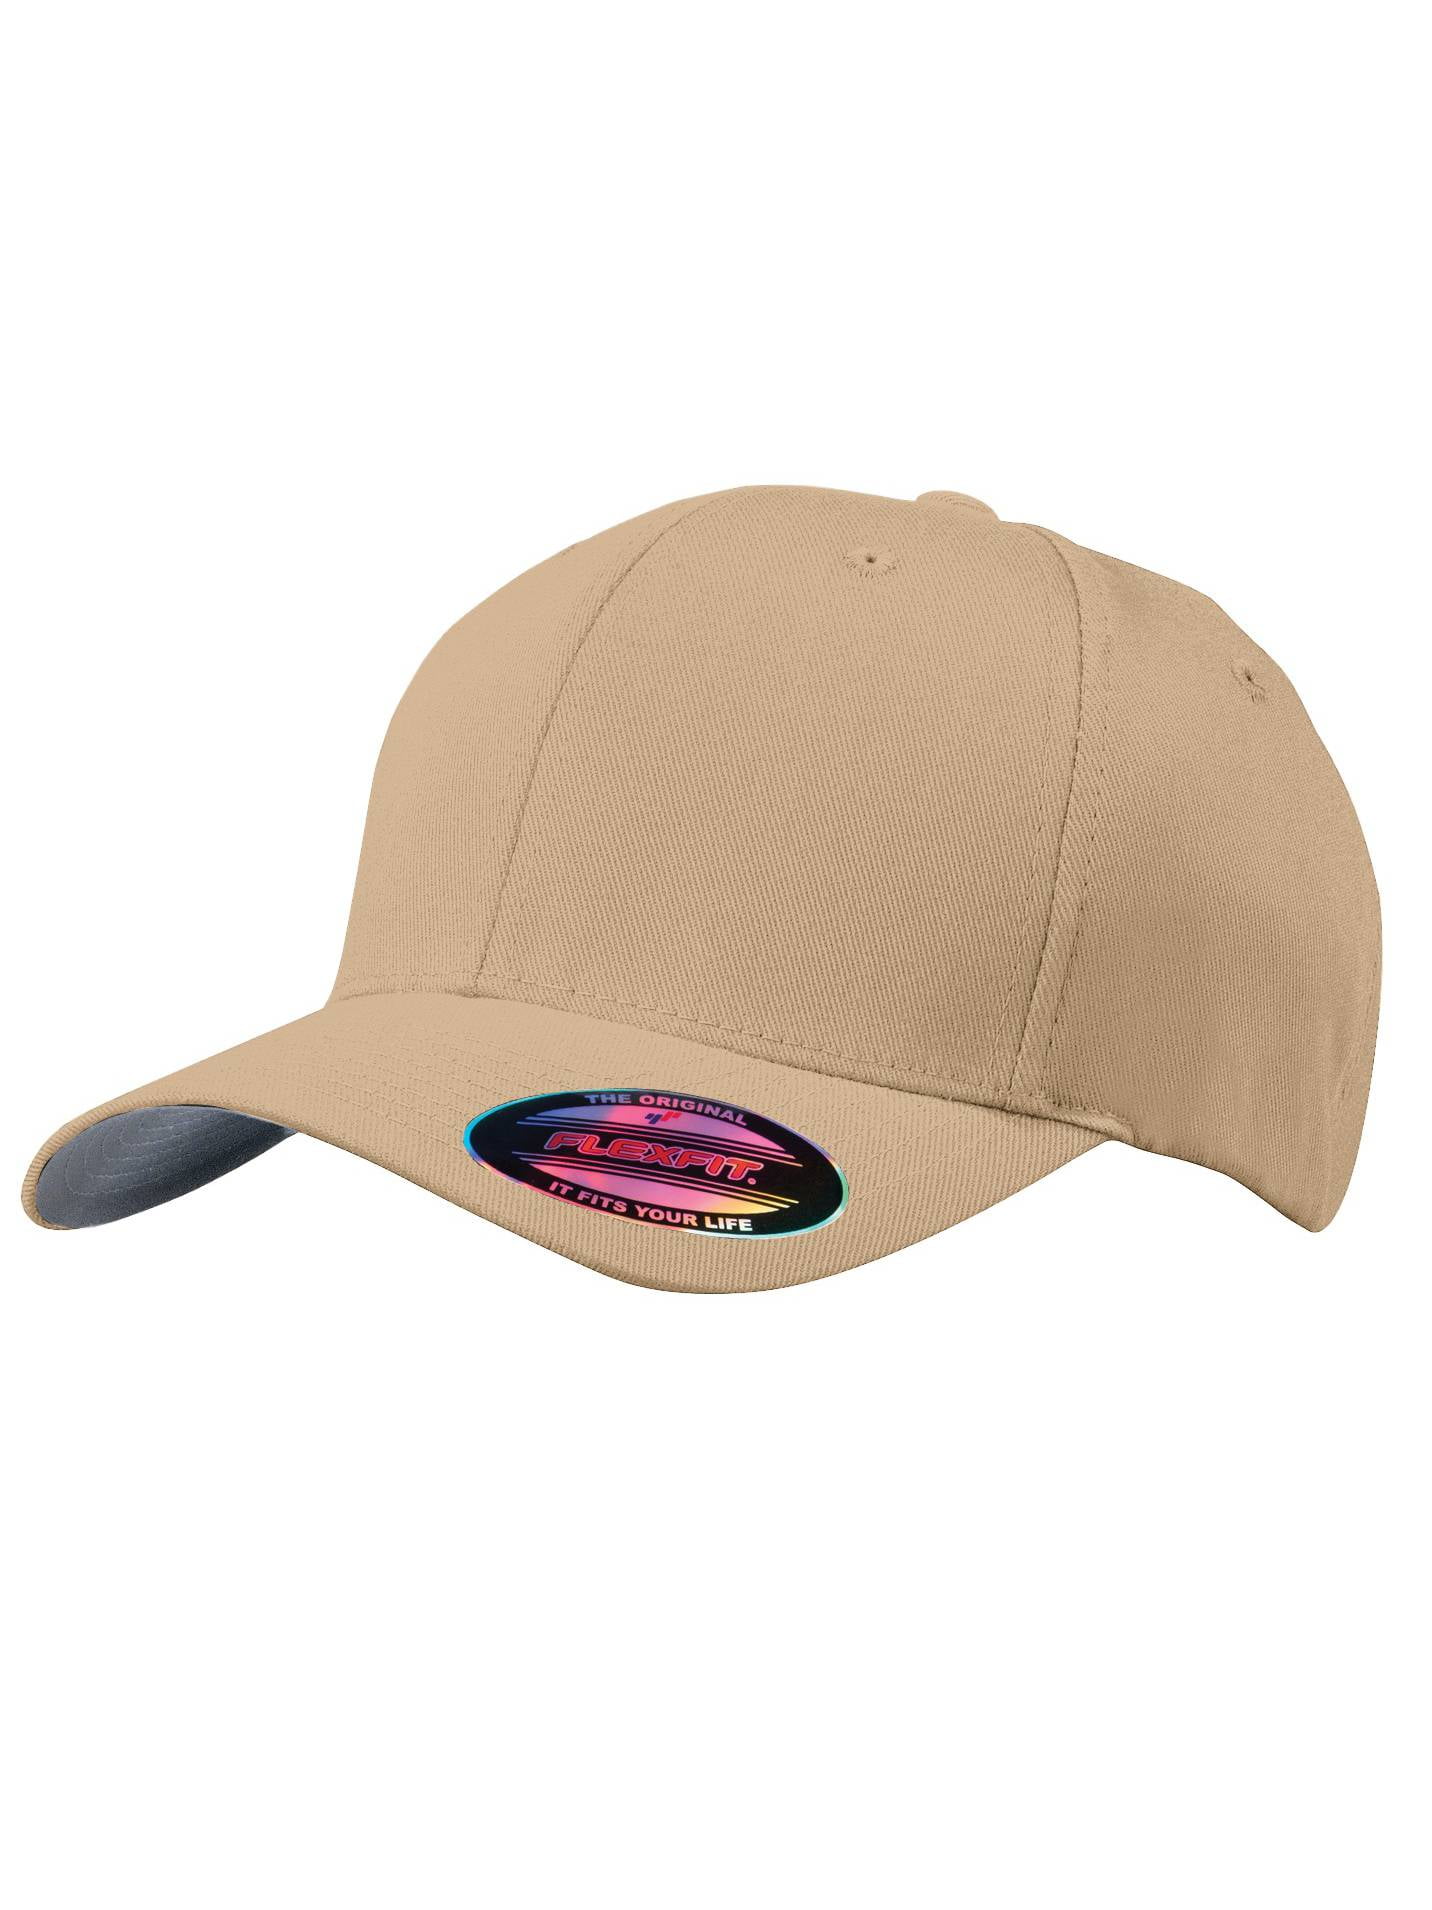 Flex Top Cap Headwear - - Large/X-Large Fit Baseball Khaki